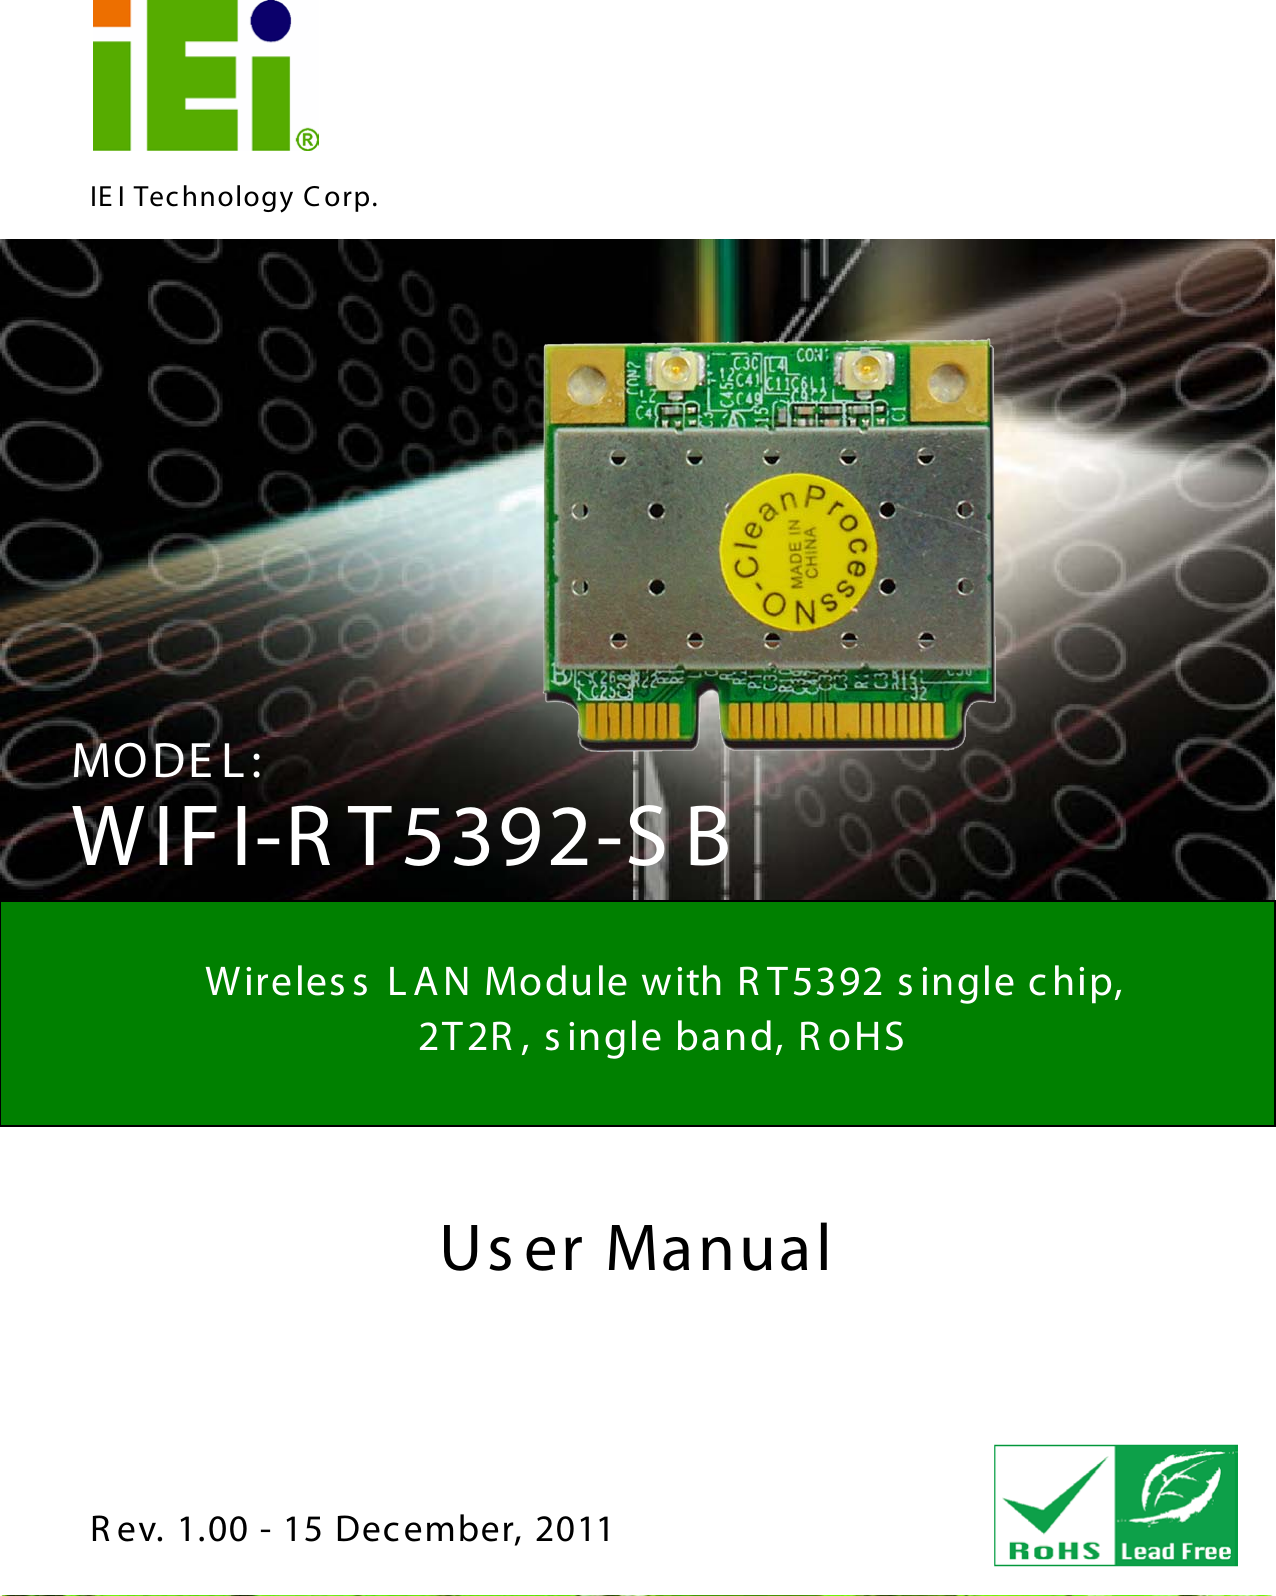   WIFI-RT5392-SB Page 1 IEI Technology Corp. User Manual  WIFI-R T5392-SB MODE L: Wireless LAN Module with R T5392 single chip,   2T2R , s ingle band, R oHS  Rev. 1.00 - 15 December, 2011  WIFI-RT5392-SB CPU Card 